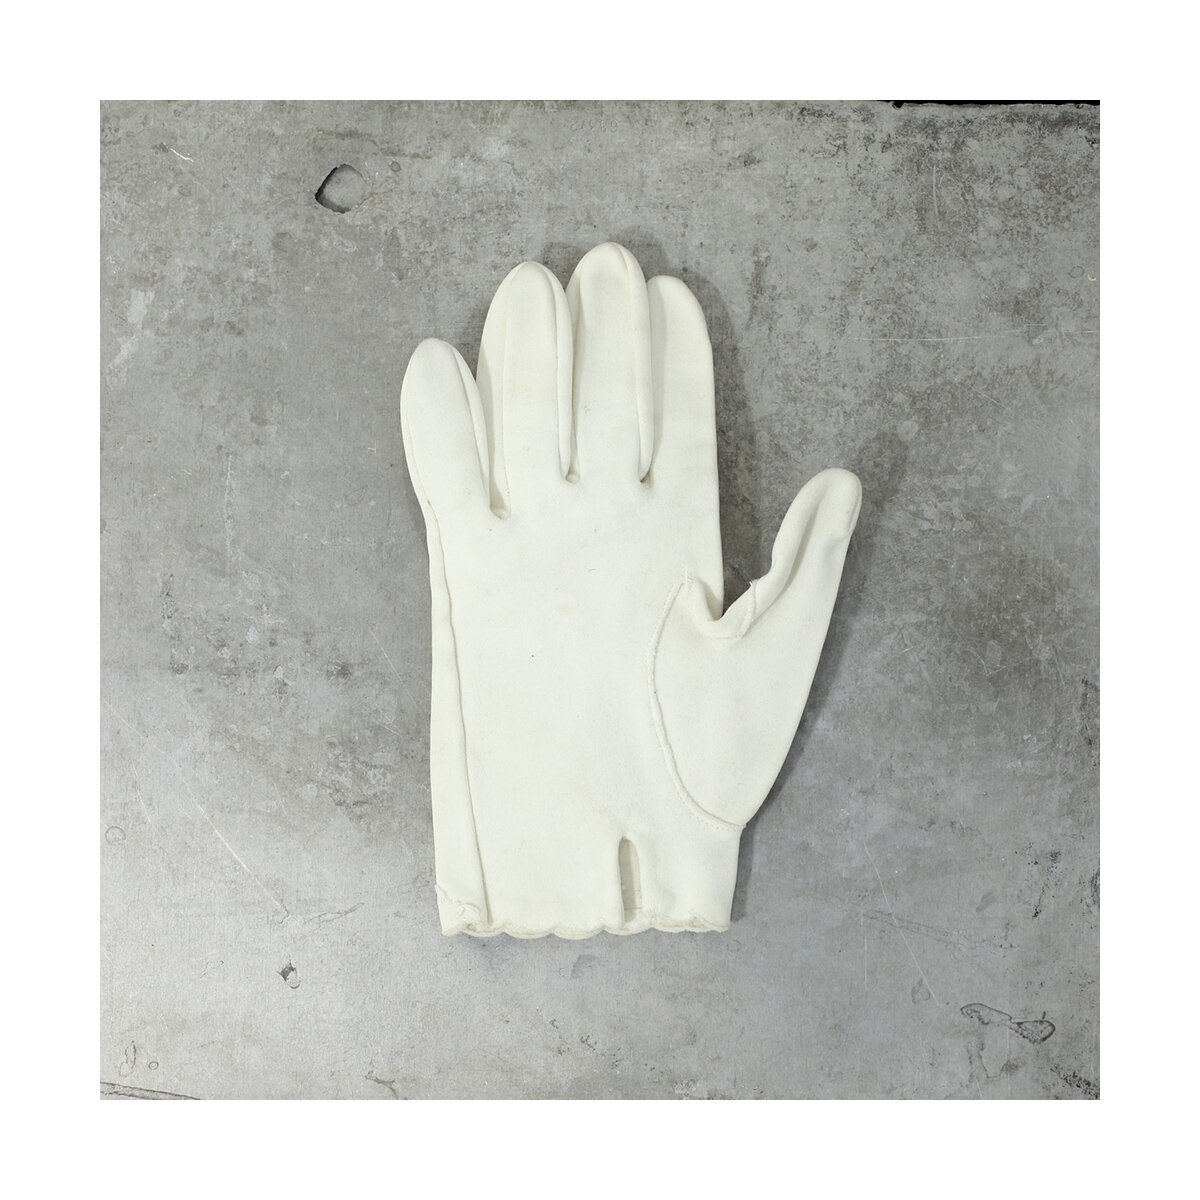 Quinceñeara Glove, 2015